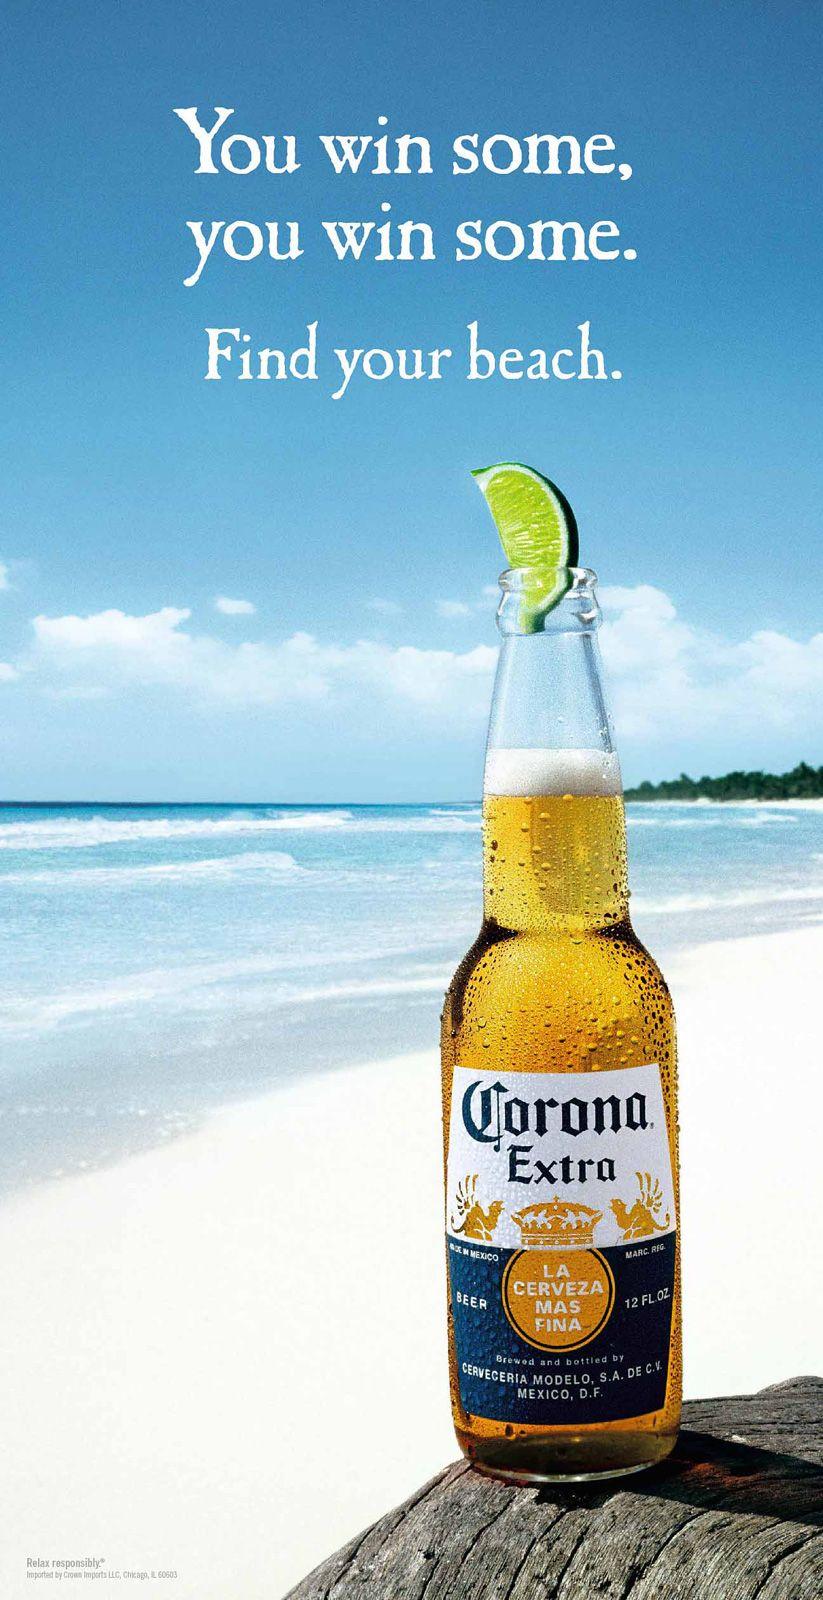 Corona Beer Outdoor Advert By Cramer Krasselt: Win Some